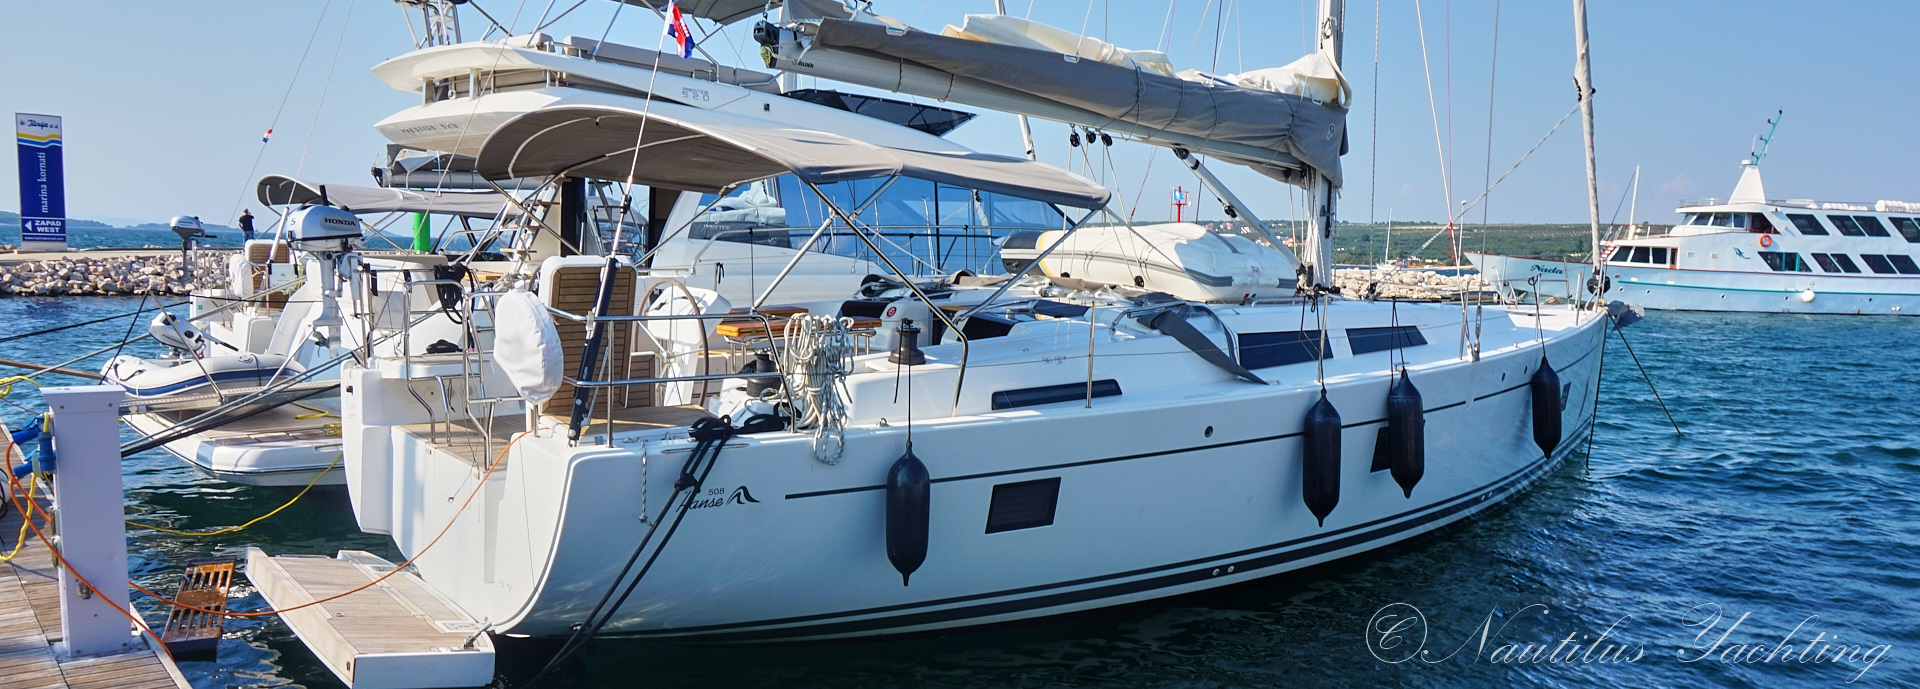 Hanse 508 - Sailing yacht charter in Croatia